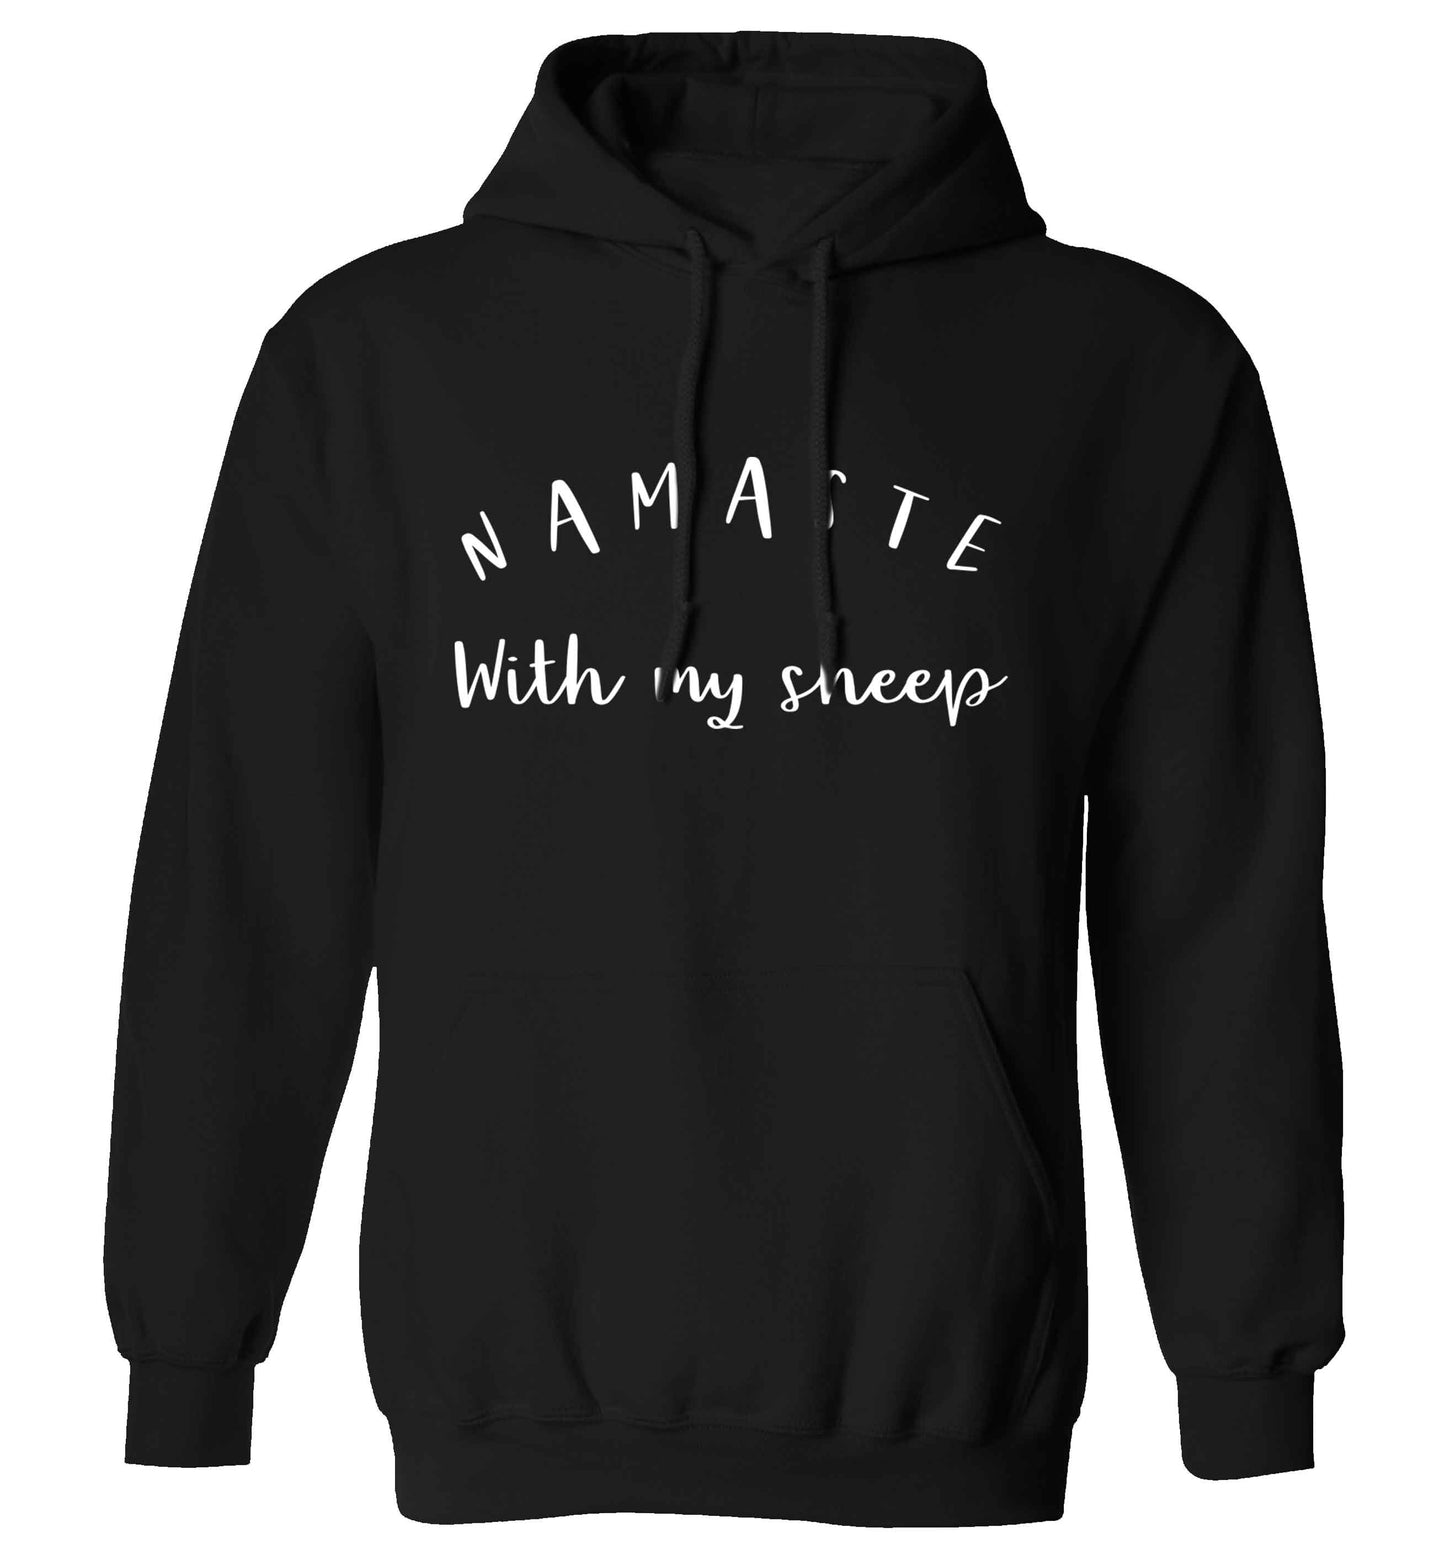 Namaste with my sheep adults unisex black hoodie 2XL